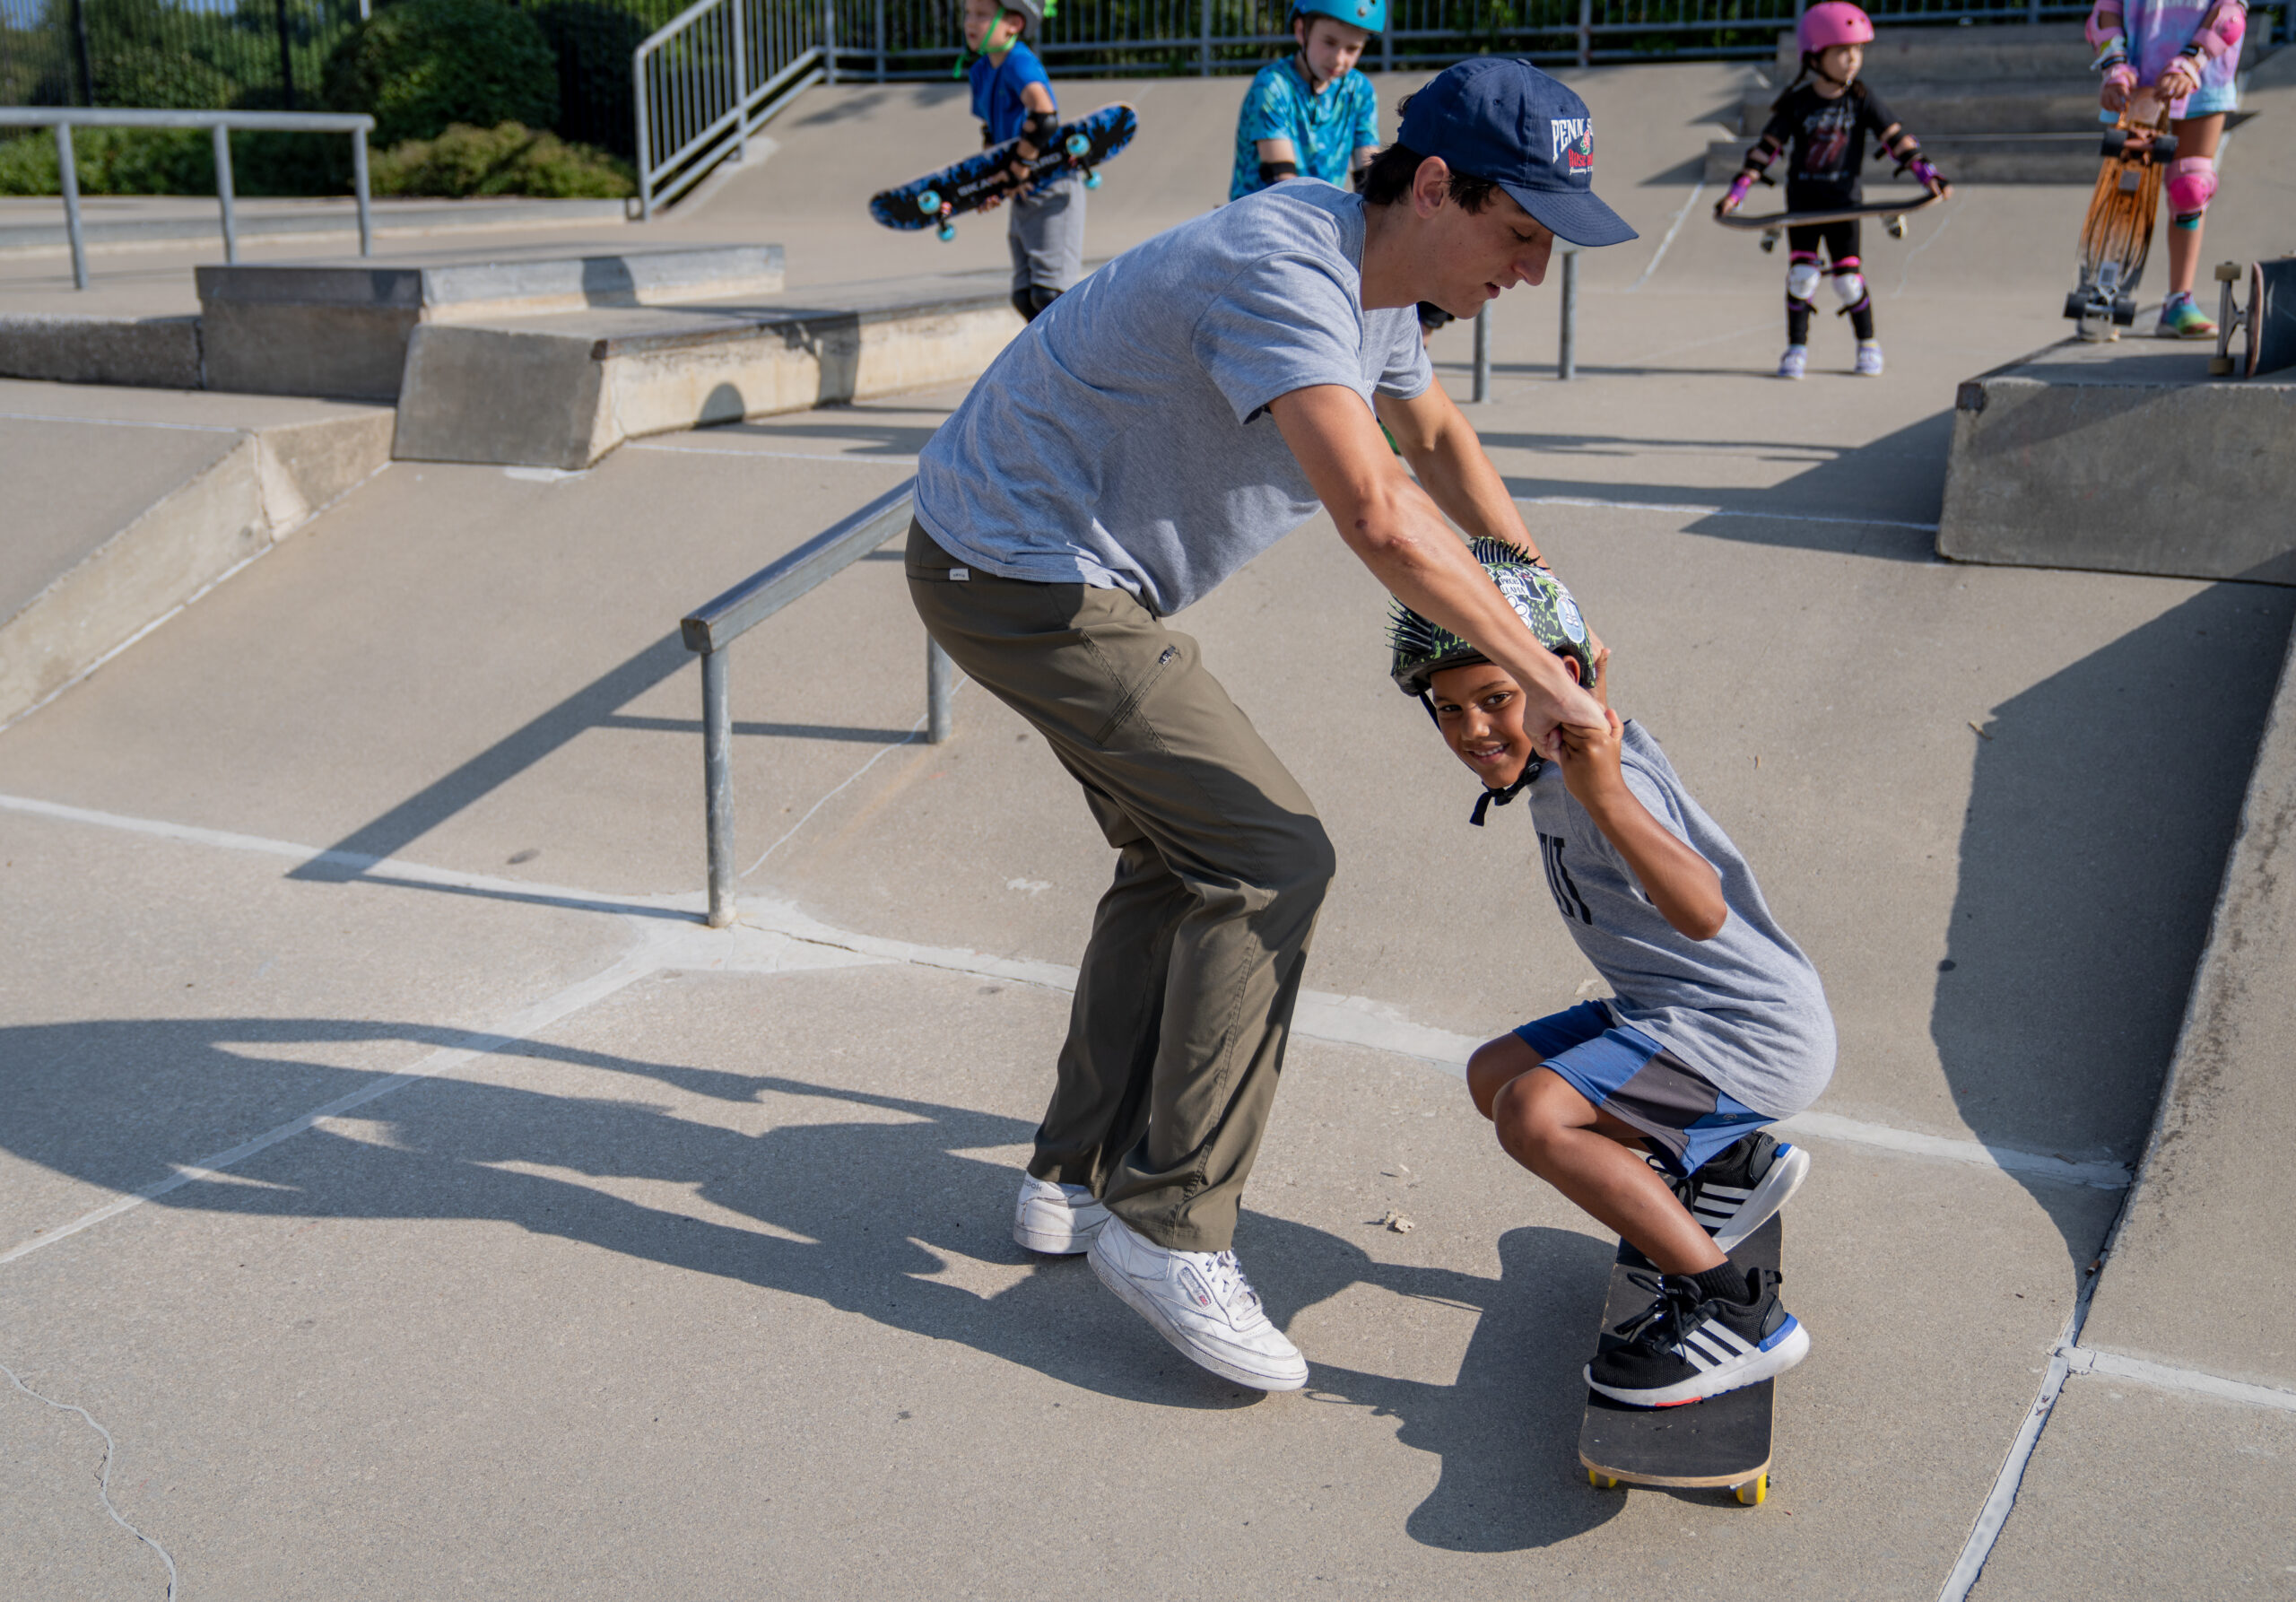 Skateboarding instructor works with beginner student at Skatepark on standing up on the board.